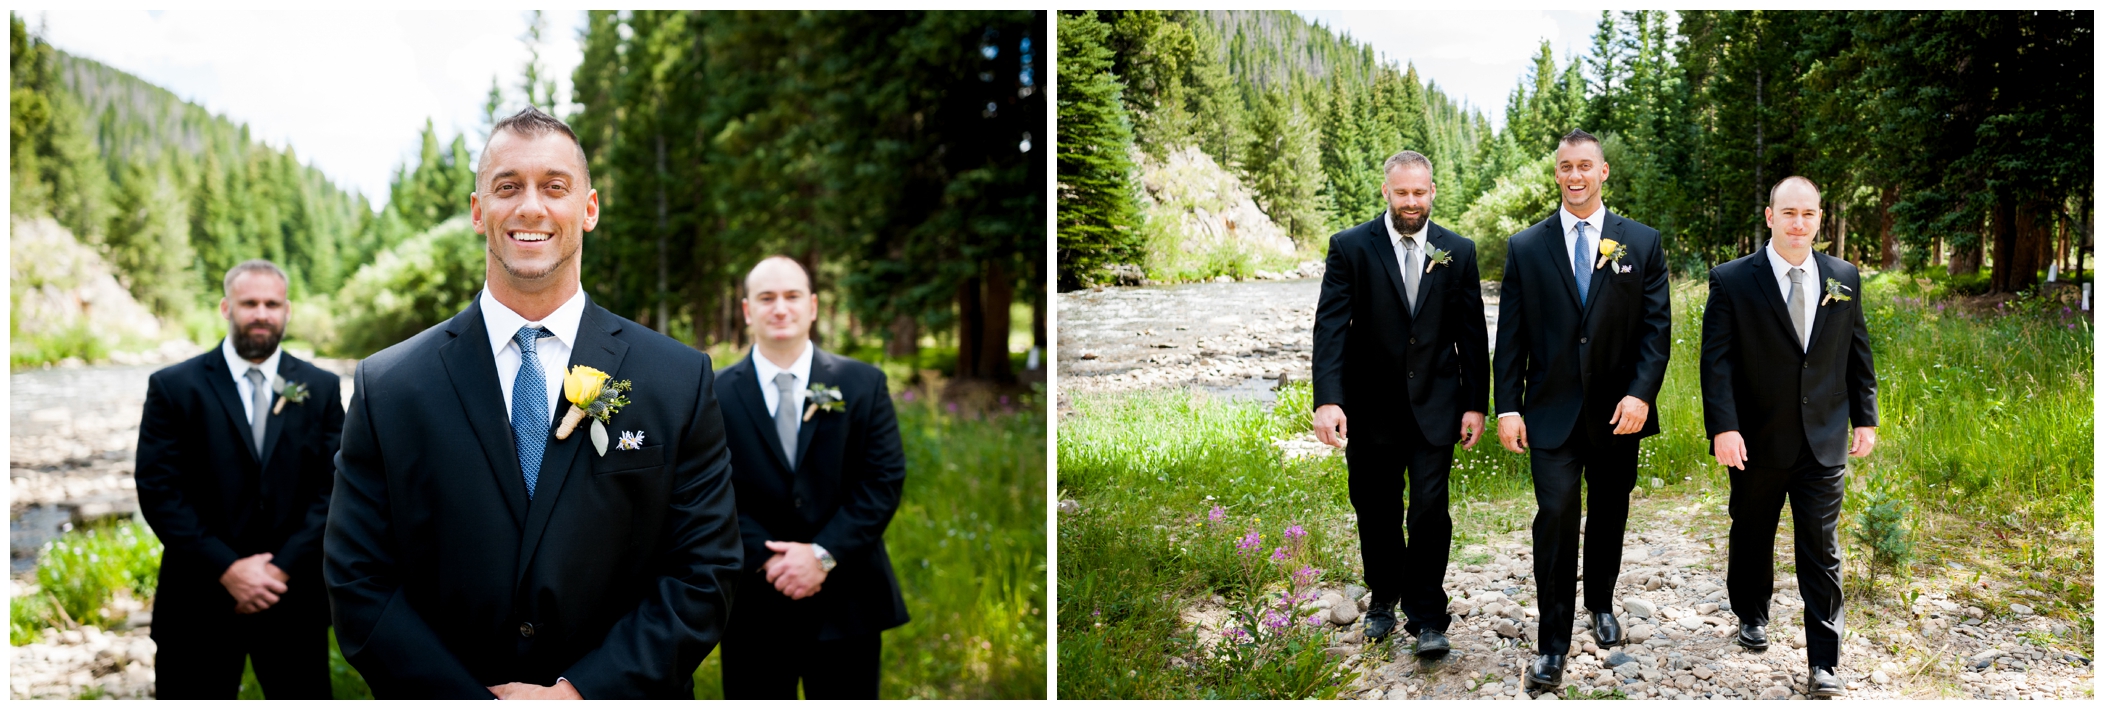 groomsmen in black suits at Colorado mountain wedding